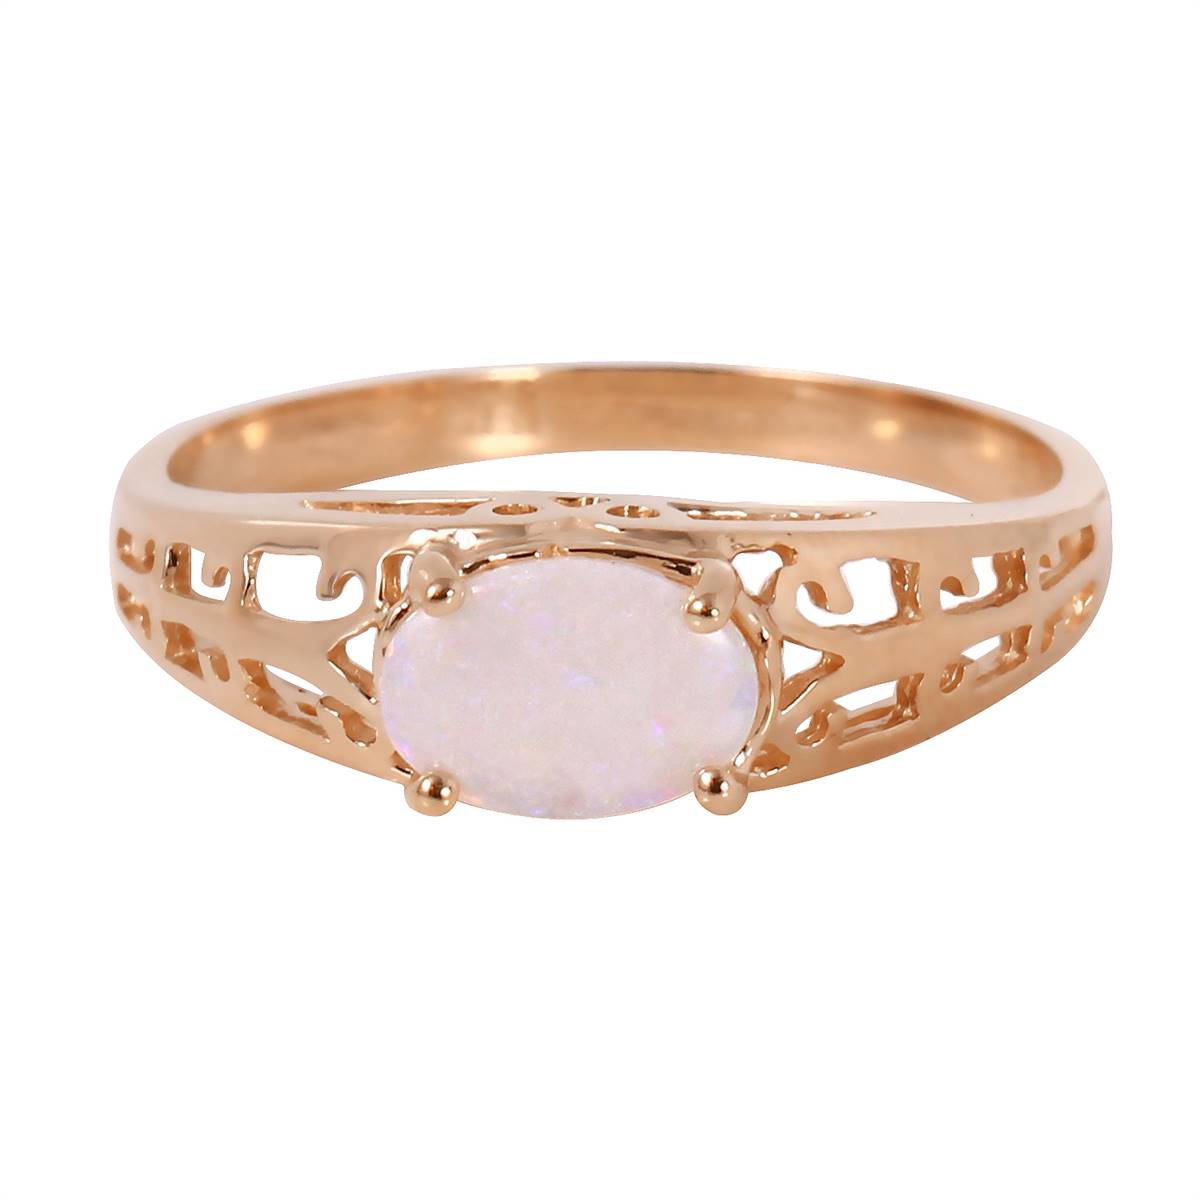 14K Solid Rose Gold Filigree Ring w/ Natural Opal